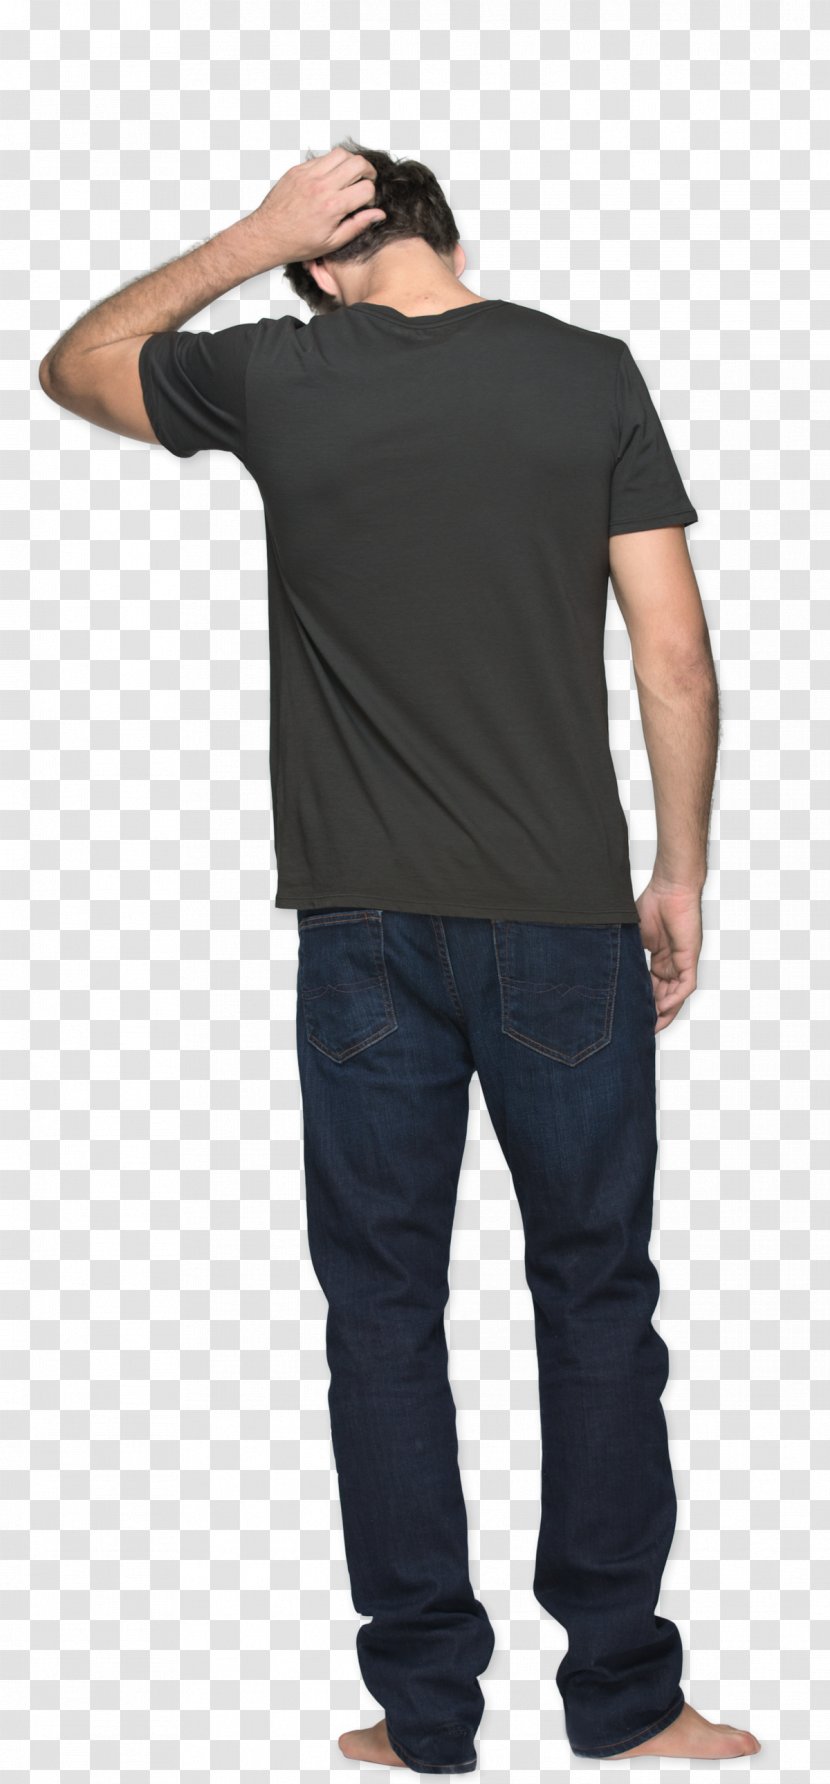 T-shirt Sleeve Overland Park Convention Center Top Human Back - Man Transparent PNG